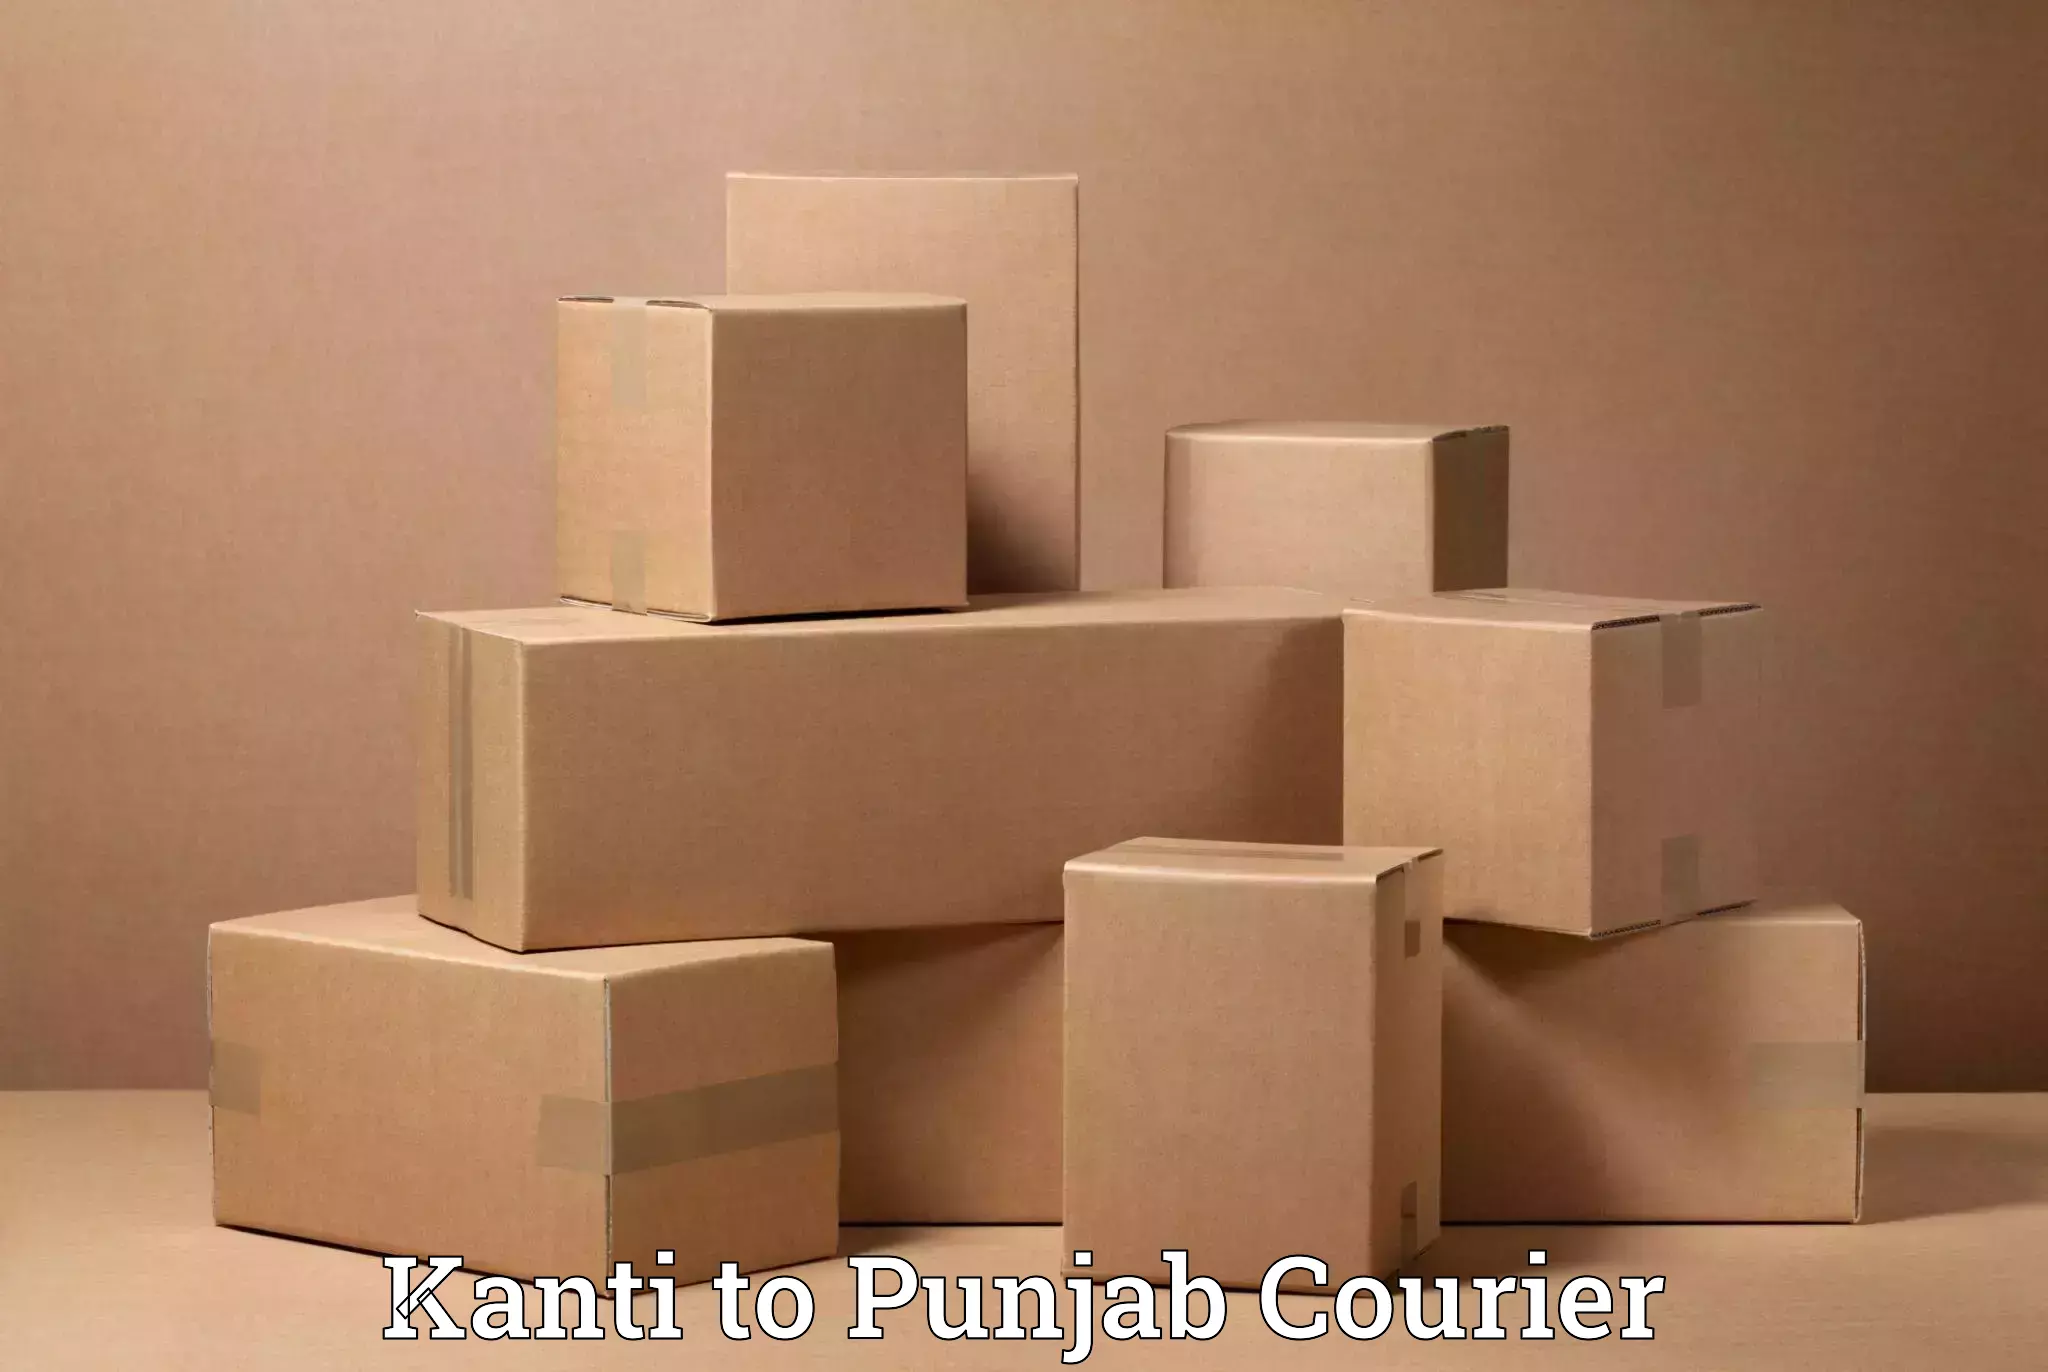 Professional movers Kanti to Punjab